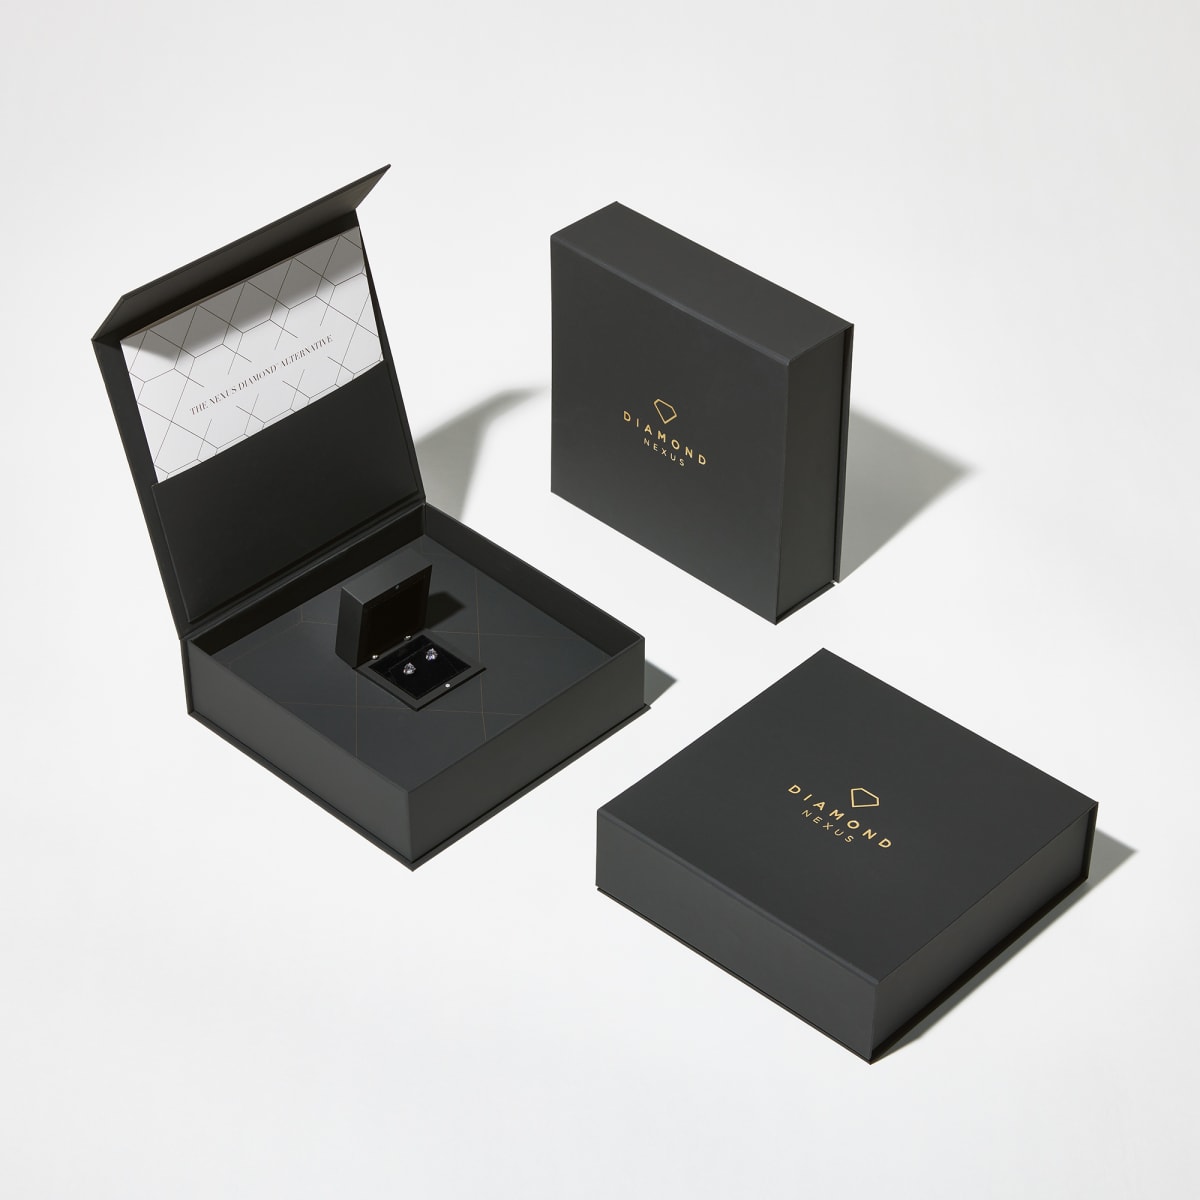 Filigree Set, Tension Back Earrings With 0.50 Cttw Princess Centers DEW, 14K Yellow Gold, Nexus Diamond Alternative